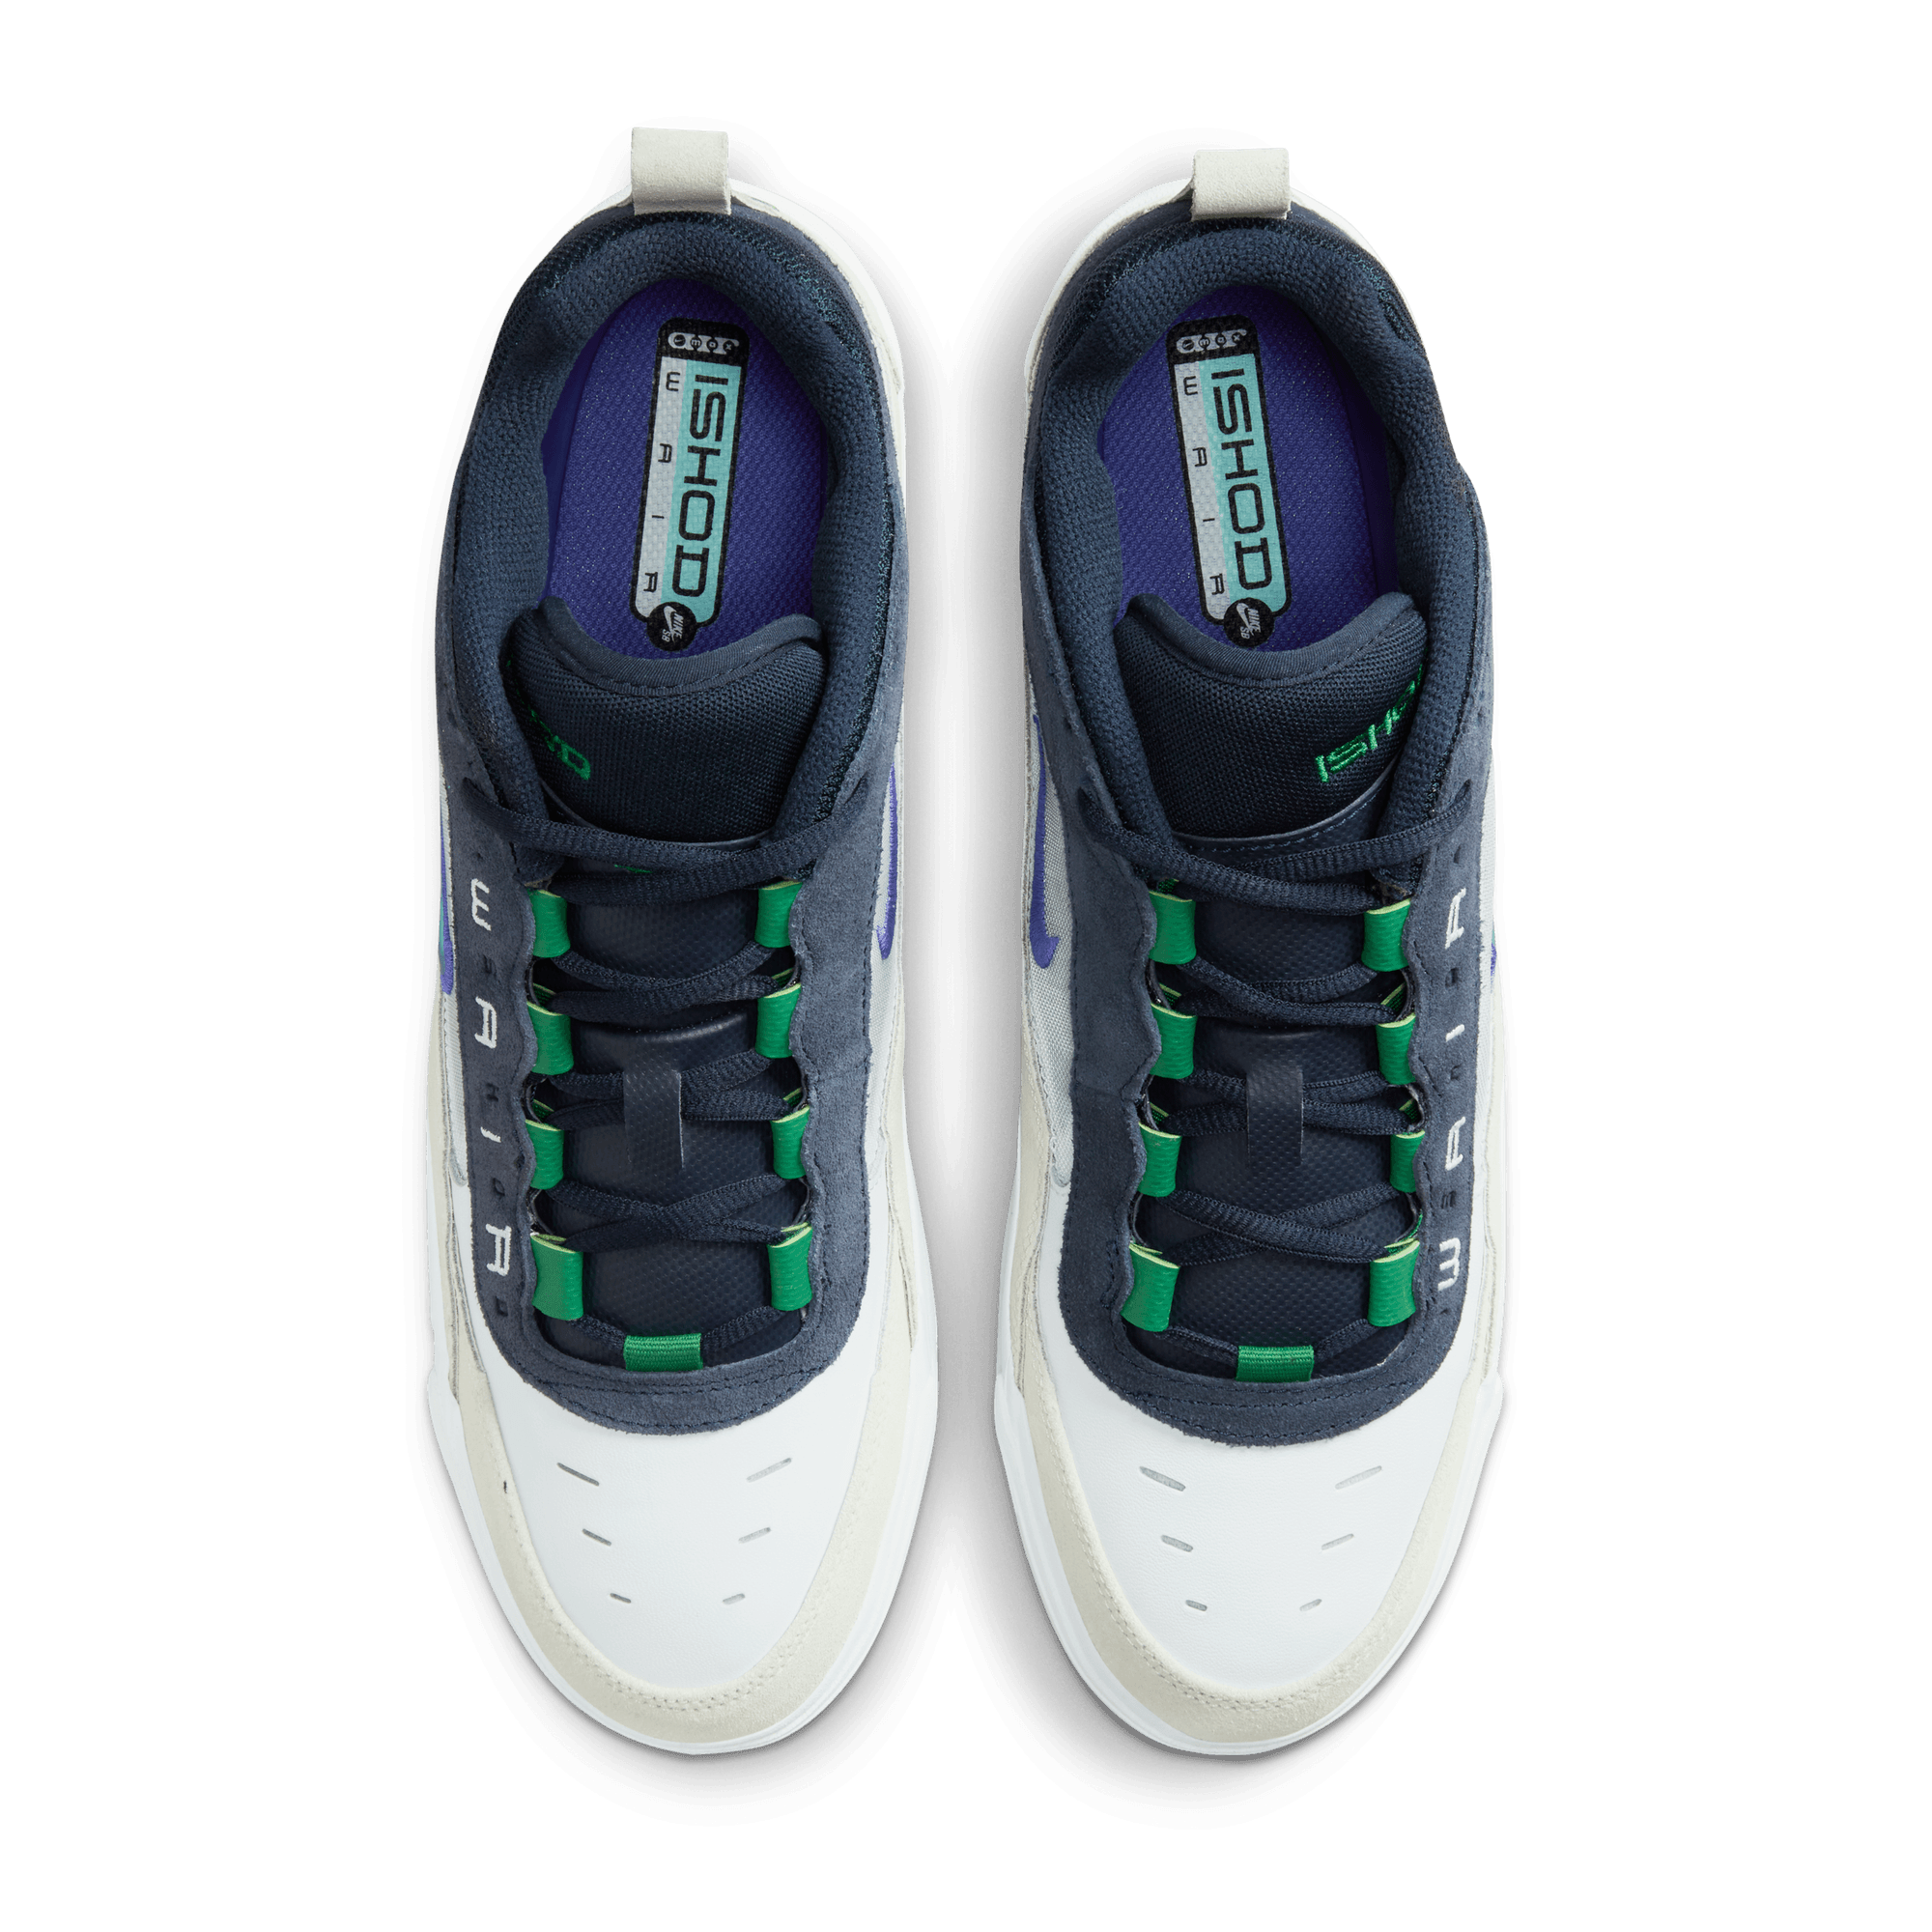 White/Obsidian Air Max Ishod Wair Nike SB Skate Shoe Top